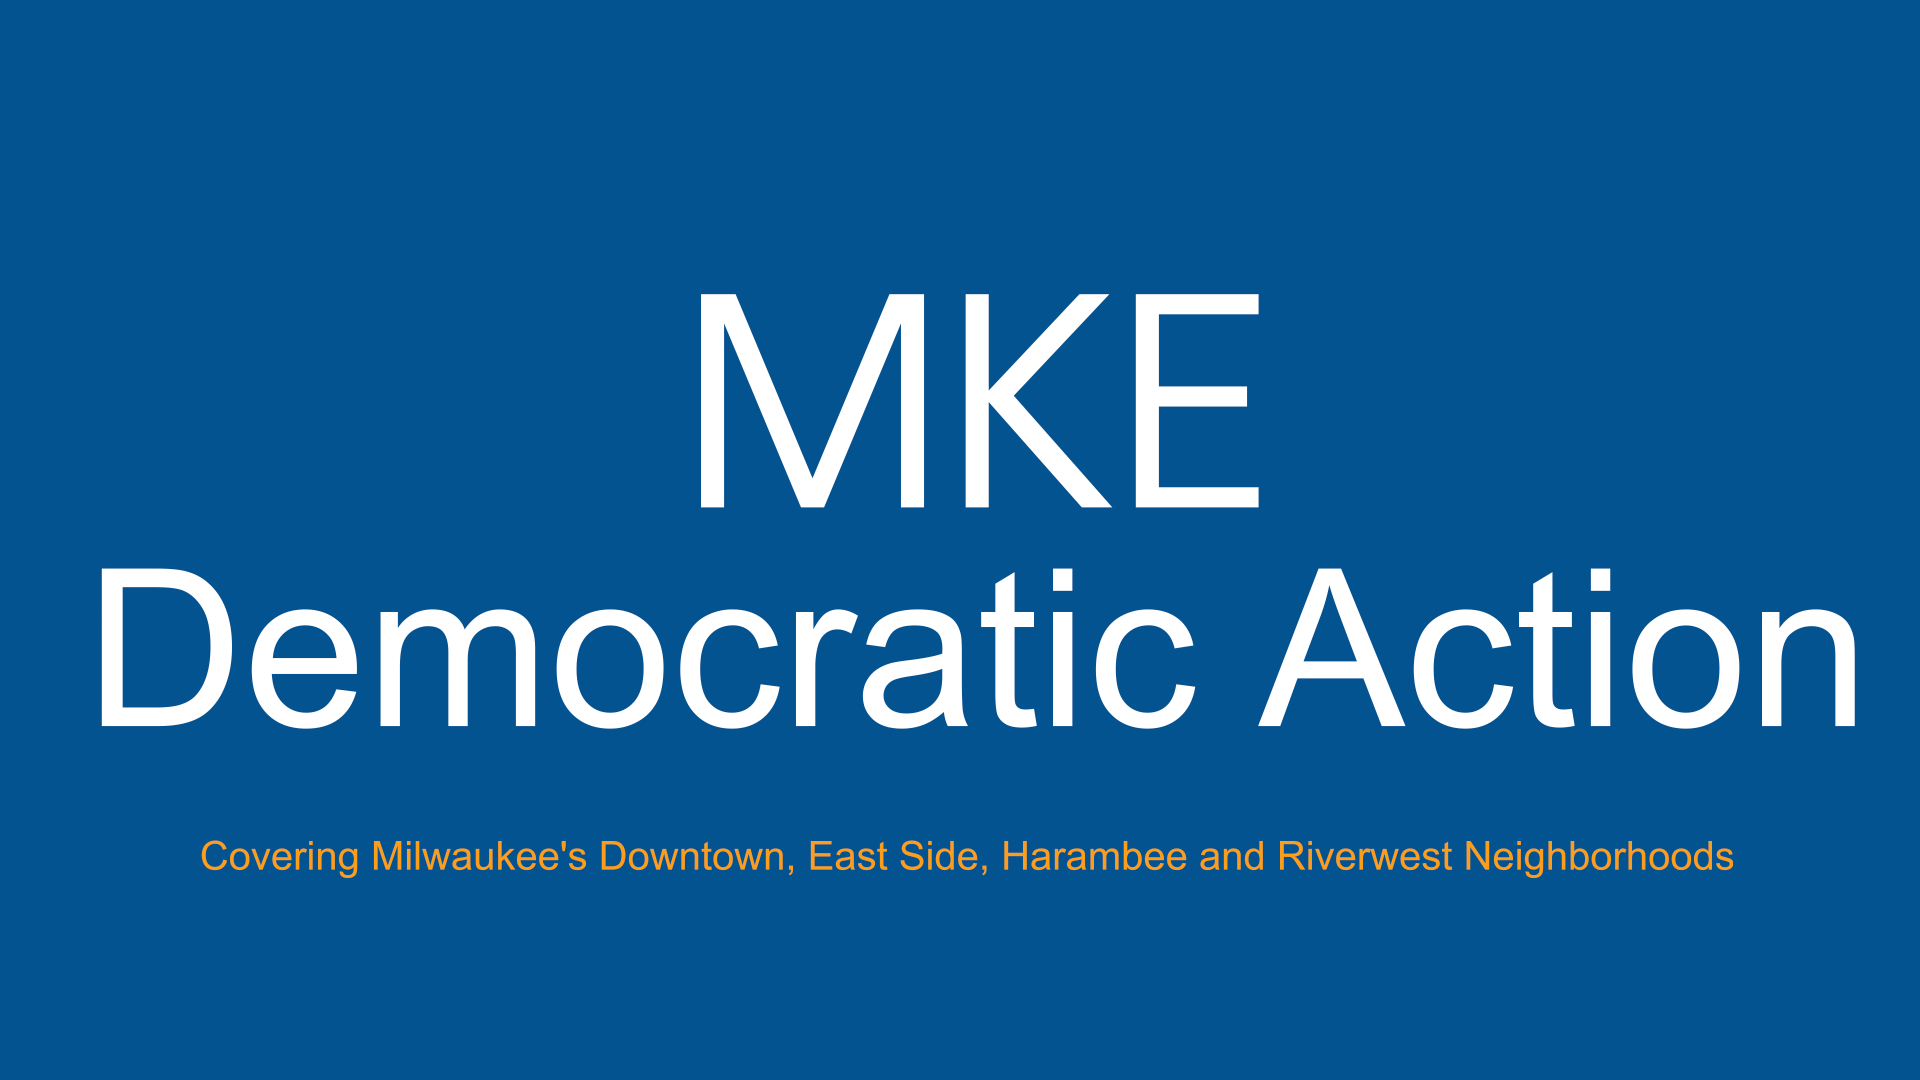 MKE Democratic Action